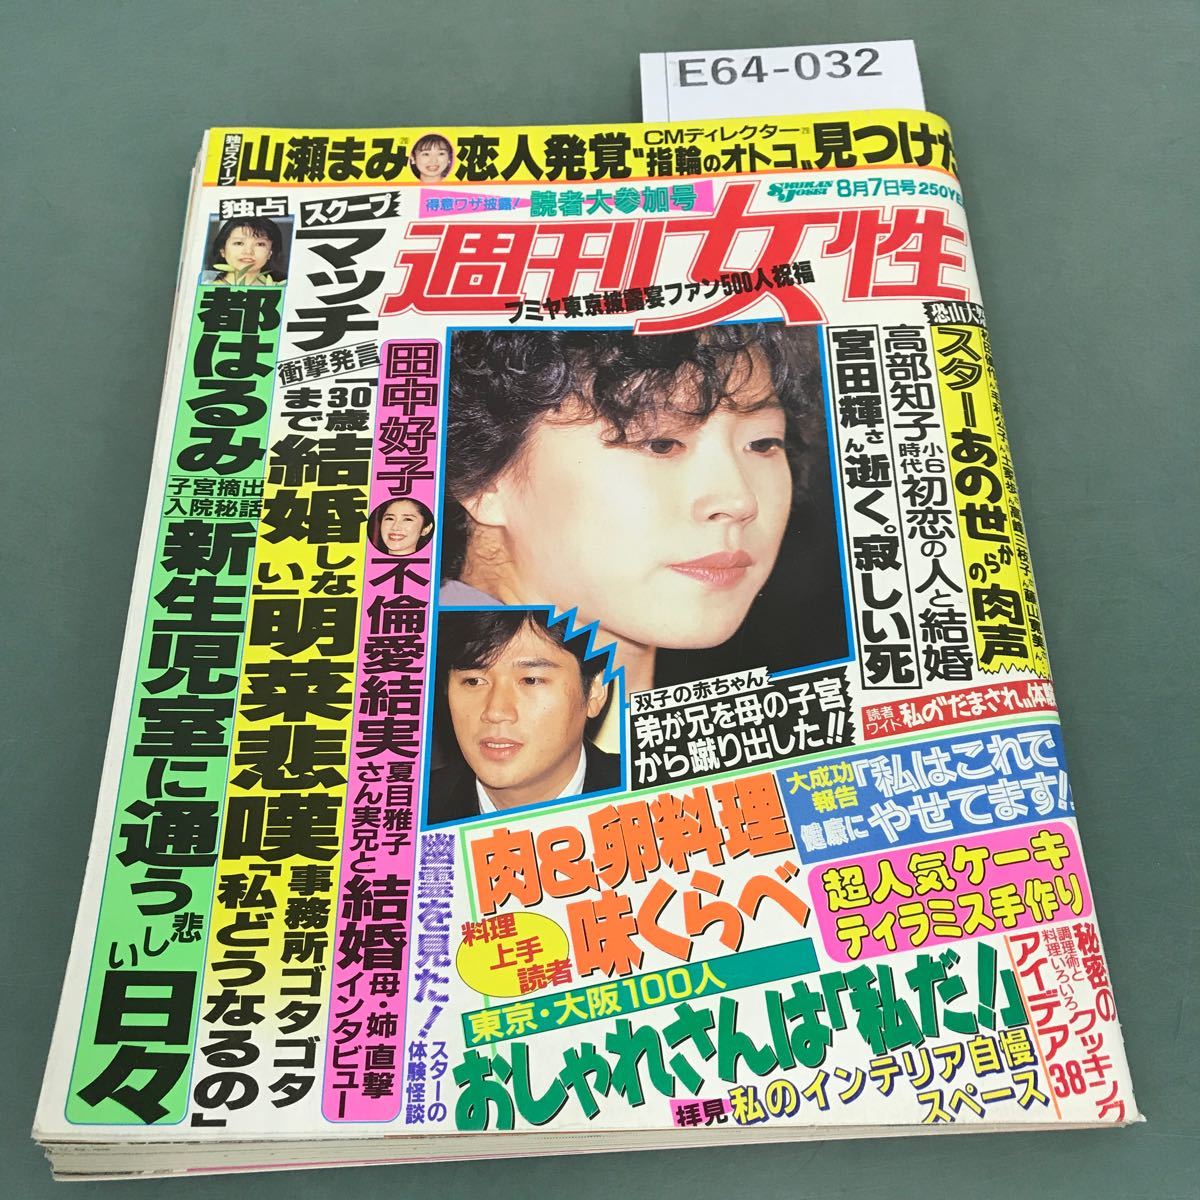 E64-032 Weekly Women, выпущенные 7 августа 1990 г. Домохозяйка и Сумиша